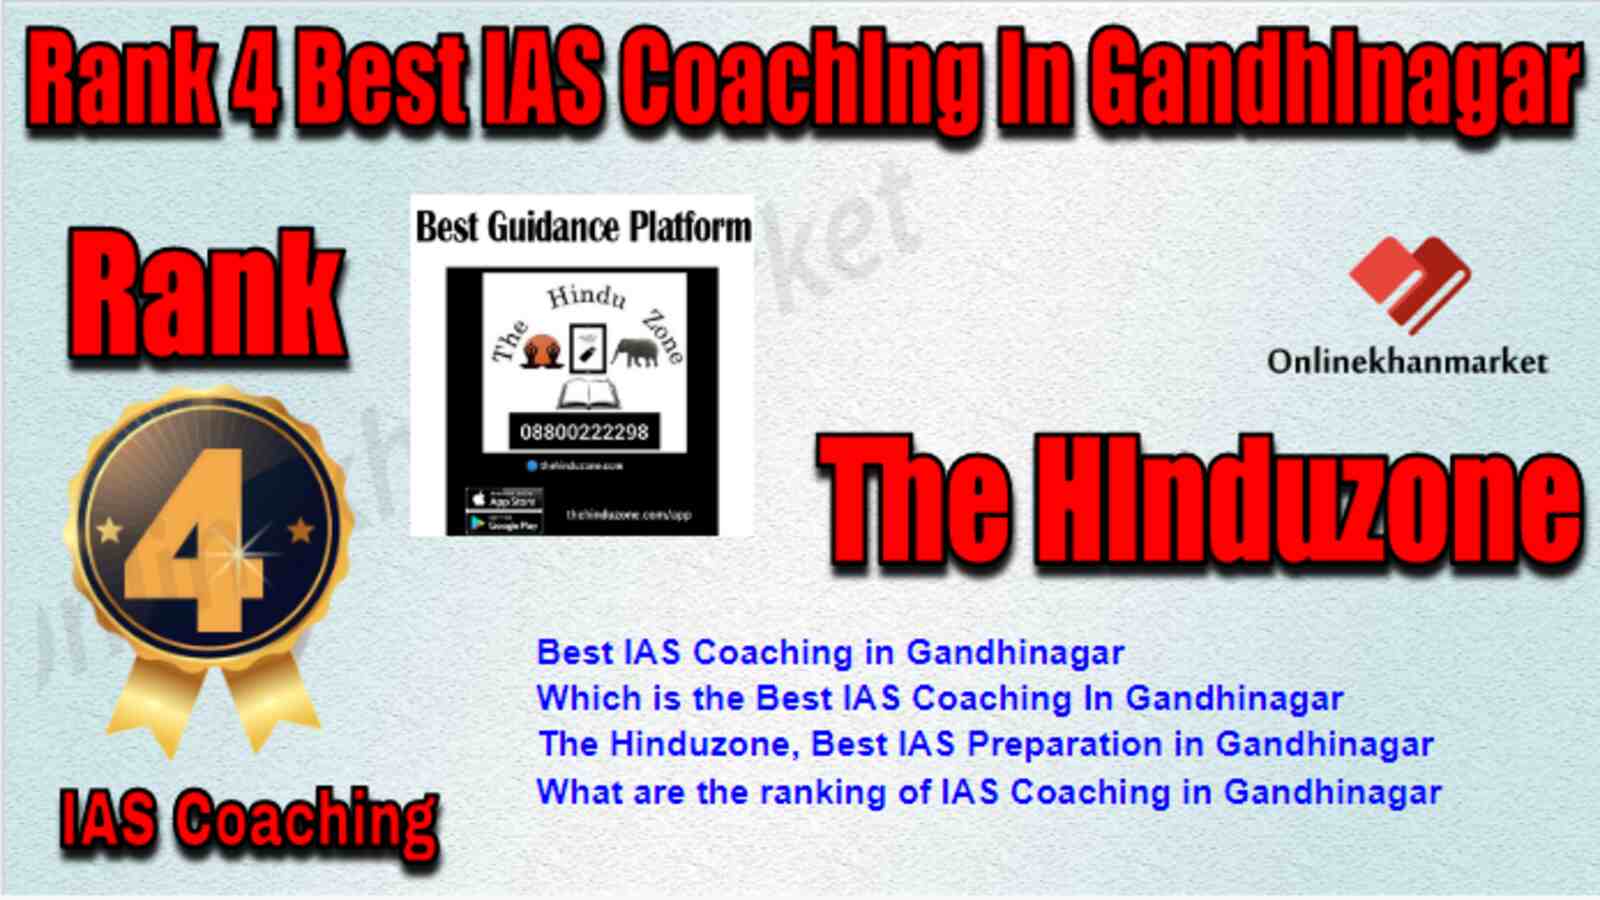 Rank 4 Best IAS Coaching in Gandhinagar